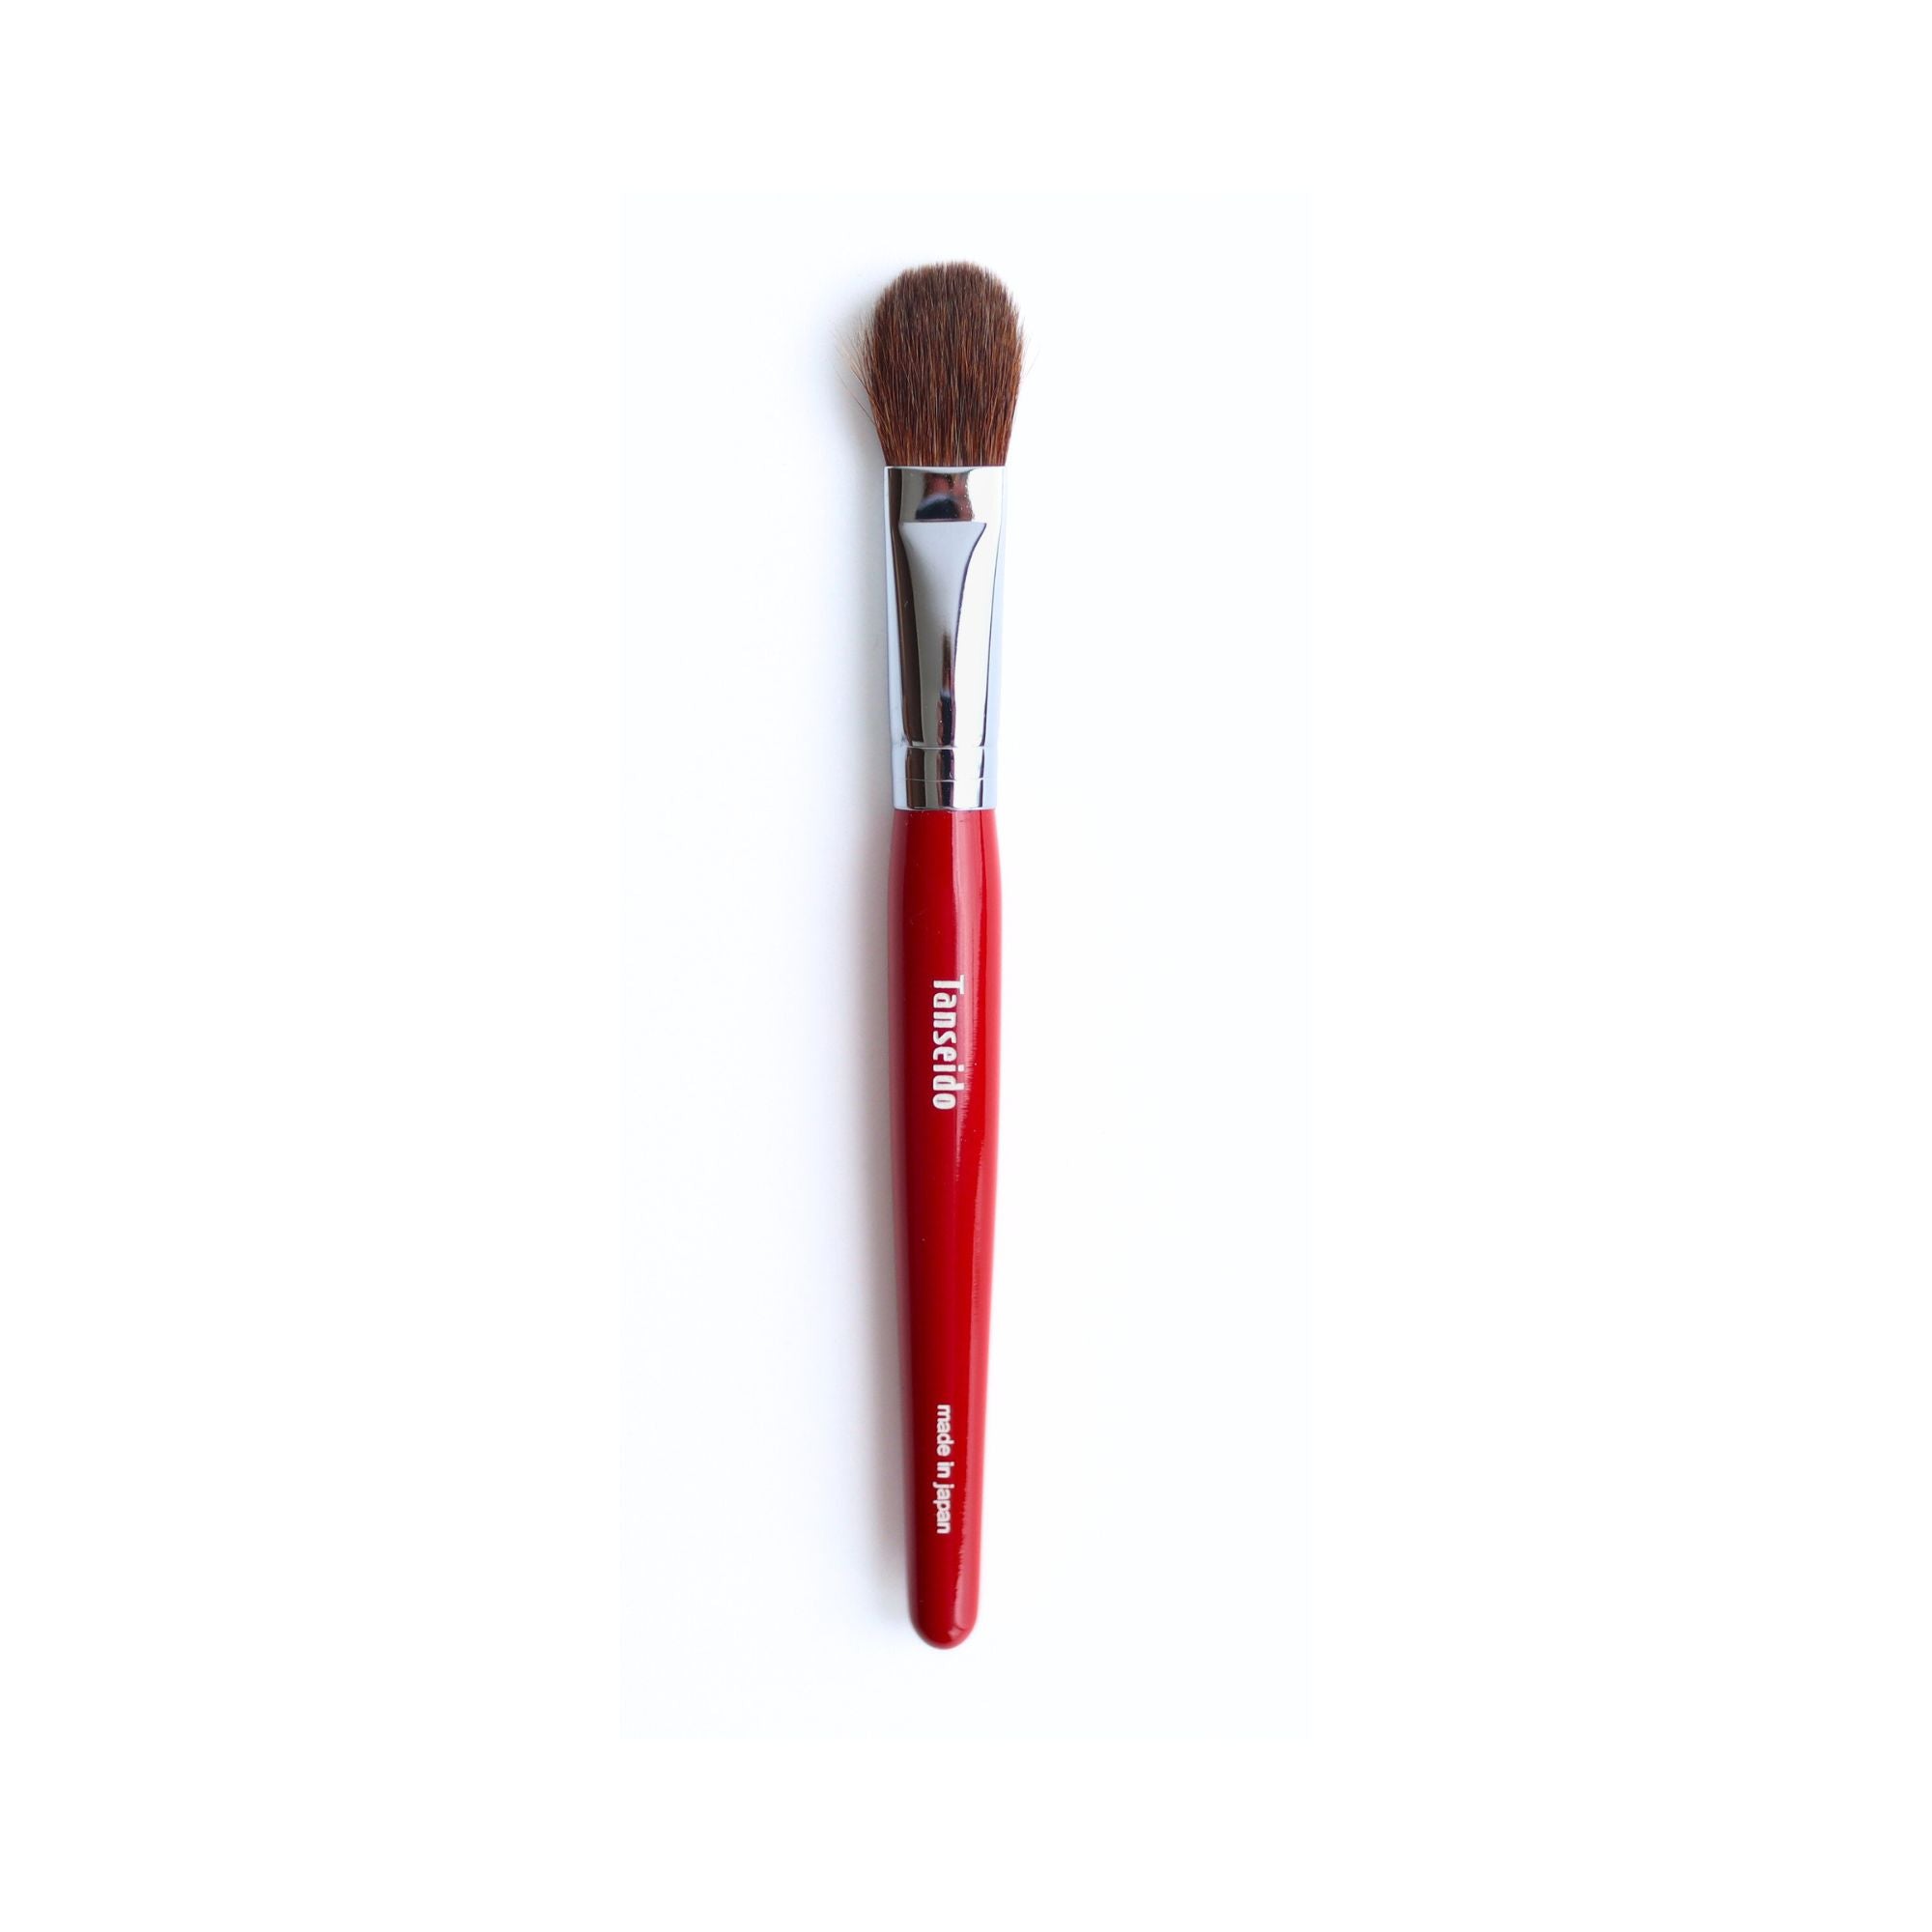 Tanseido AQ12 Eyeshadow Brush - Fude Beauty, Japanese Makeup Brushes